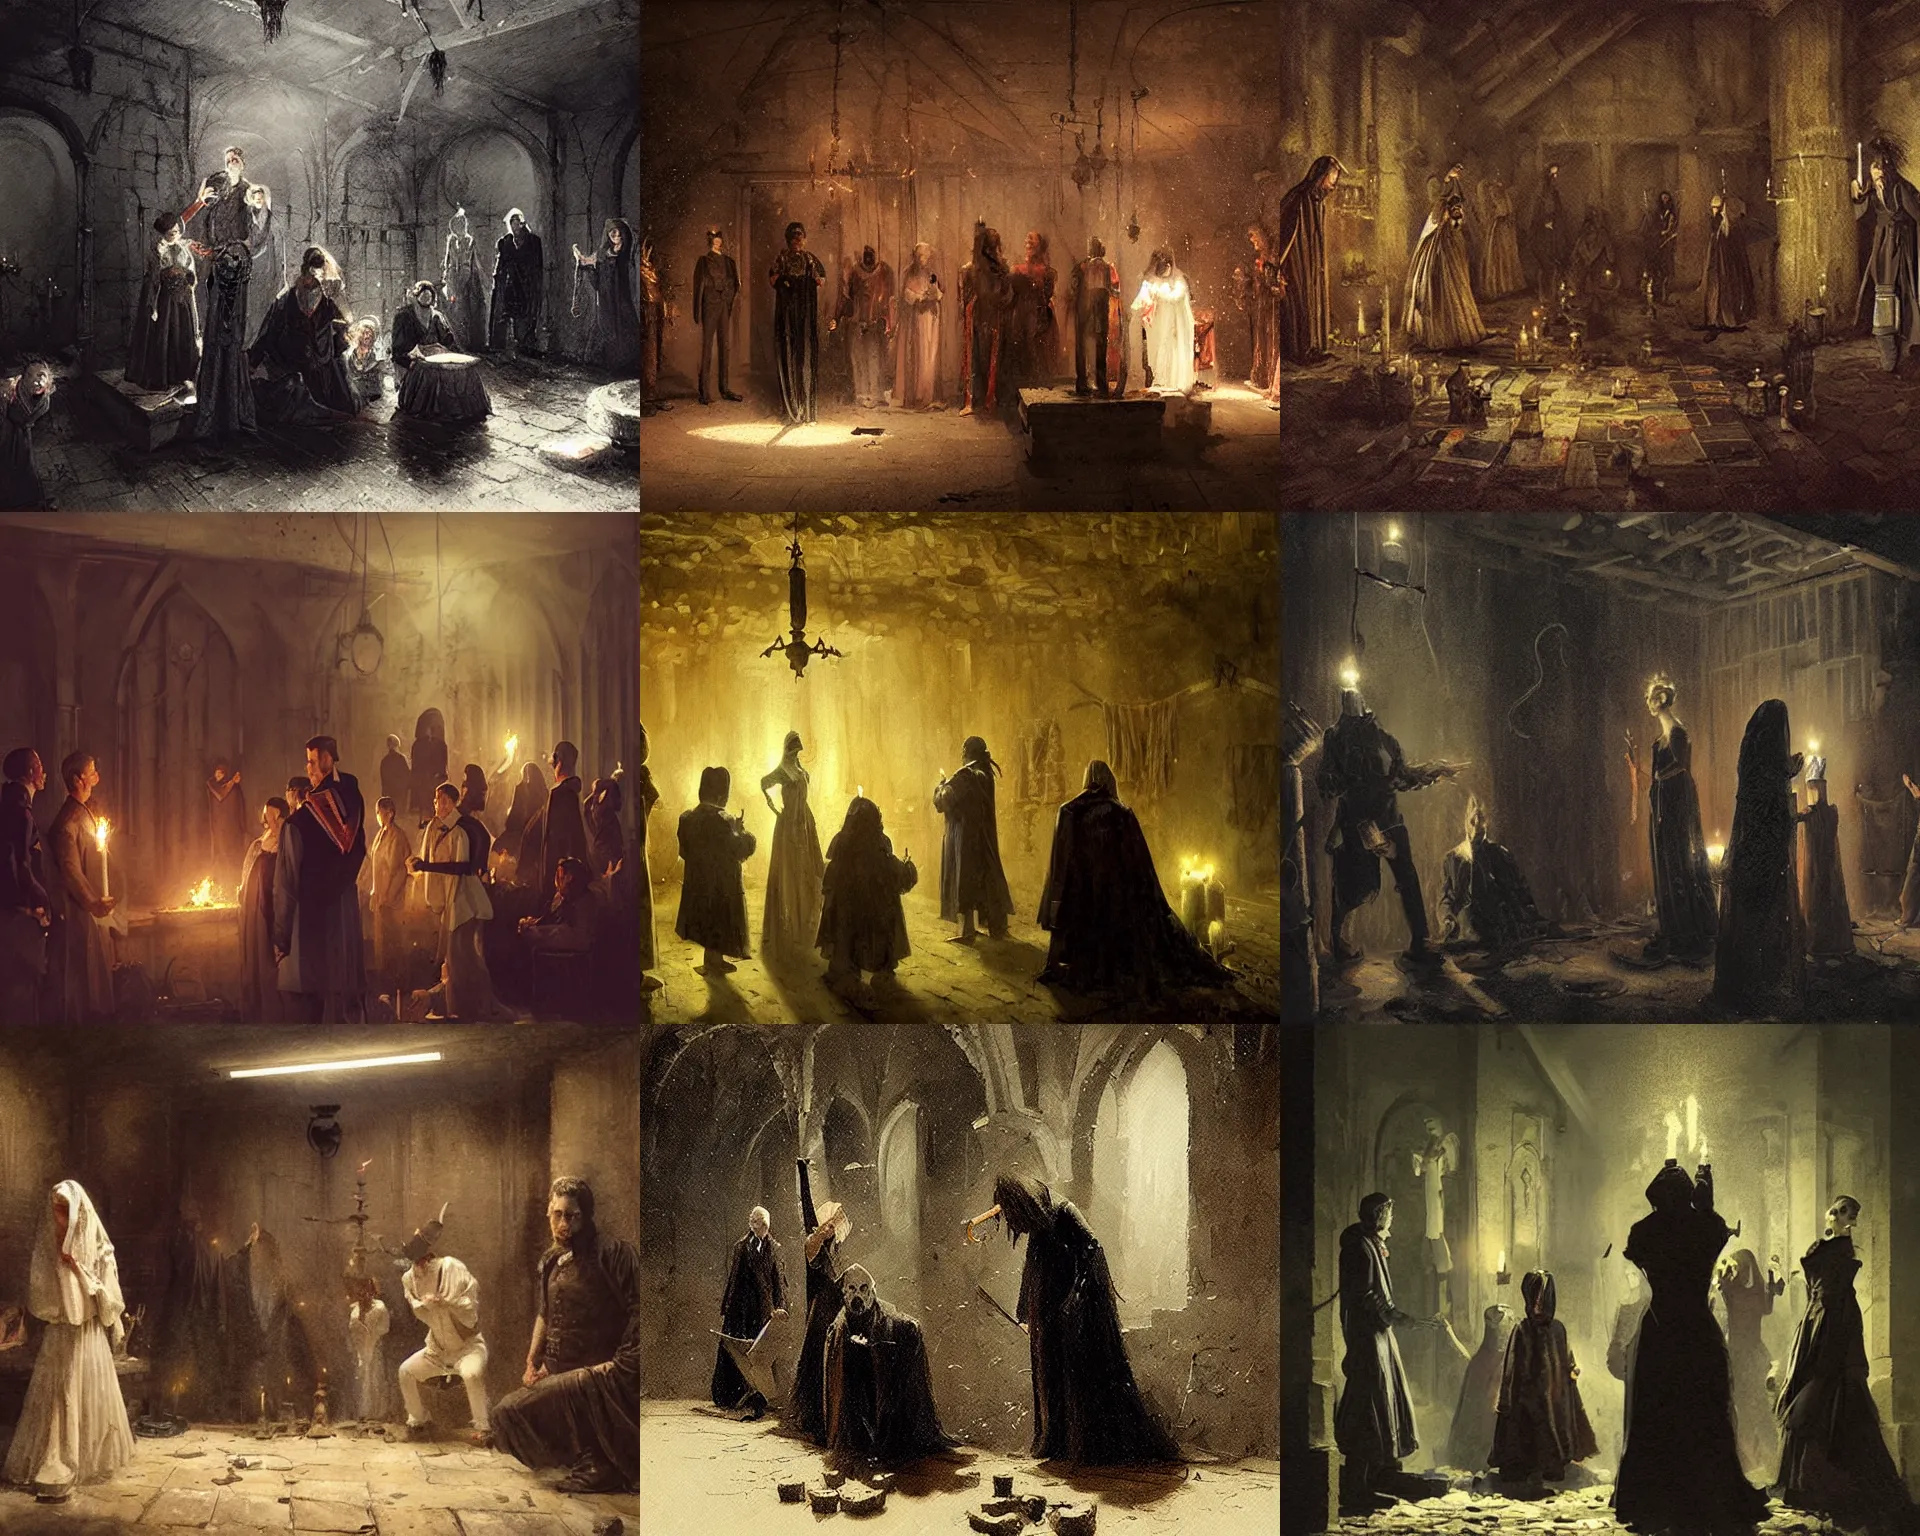 Prompt: nineteenth century aristocrats perform an unholy ritual in a dark basement, art by greg rutkowski